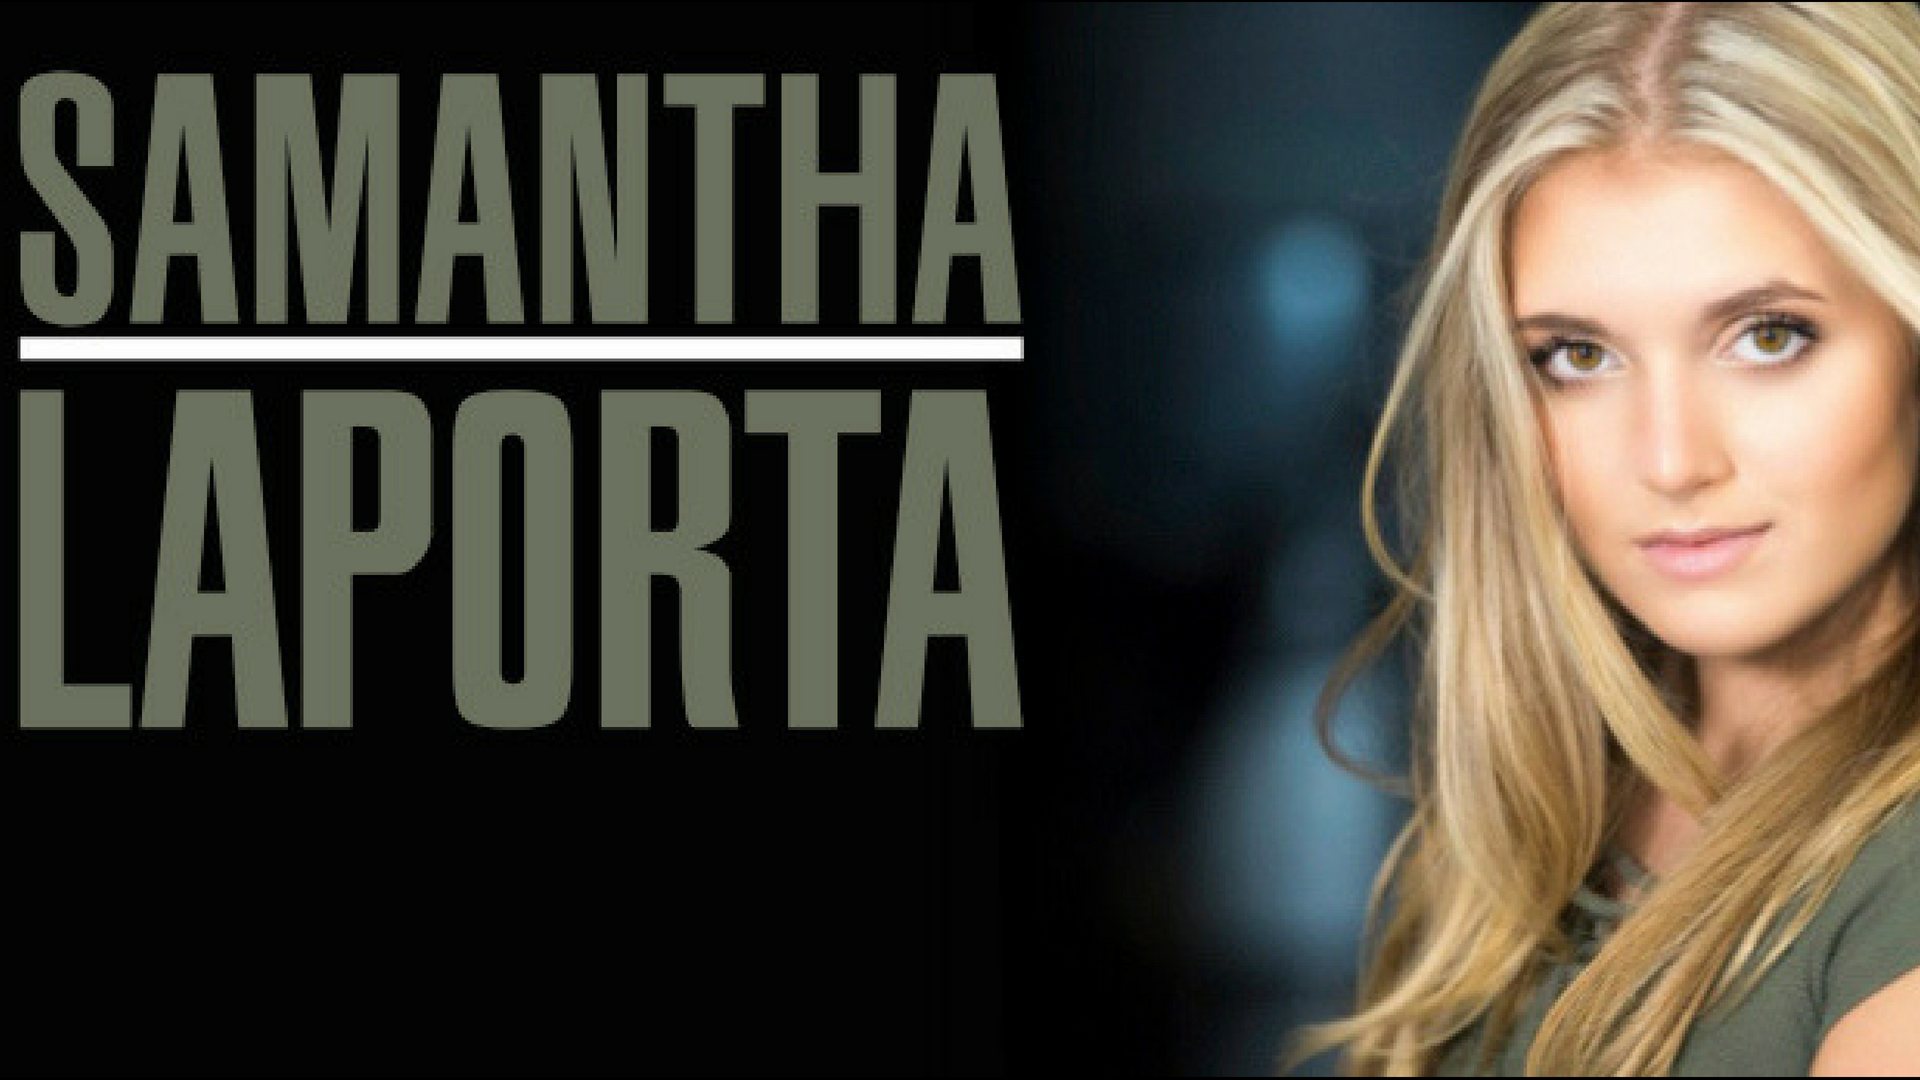 Radio Disney star Samantha Laporta discusses her new single ...